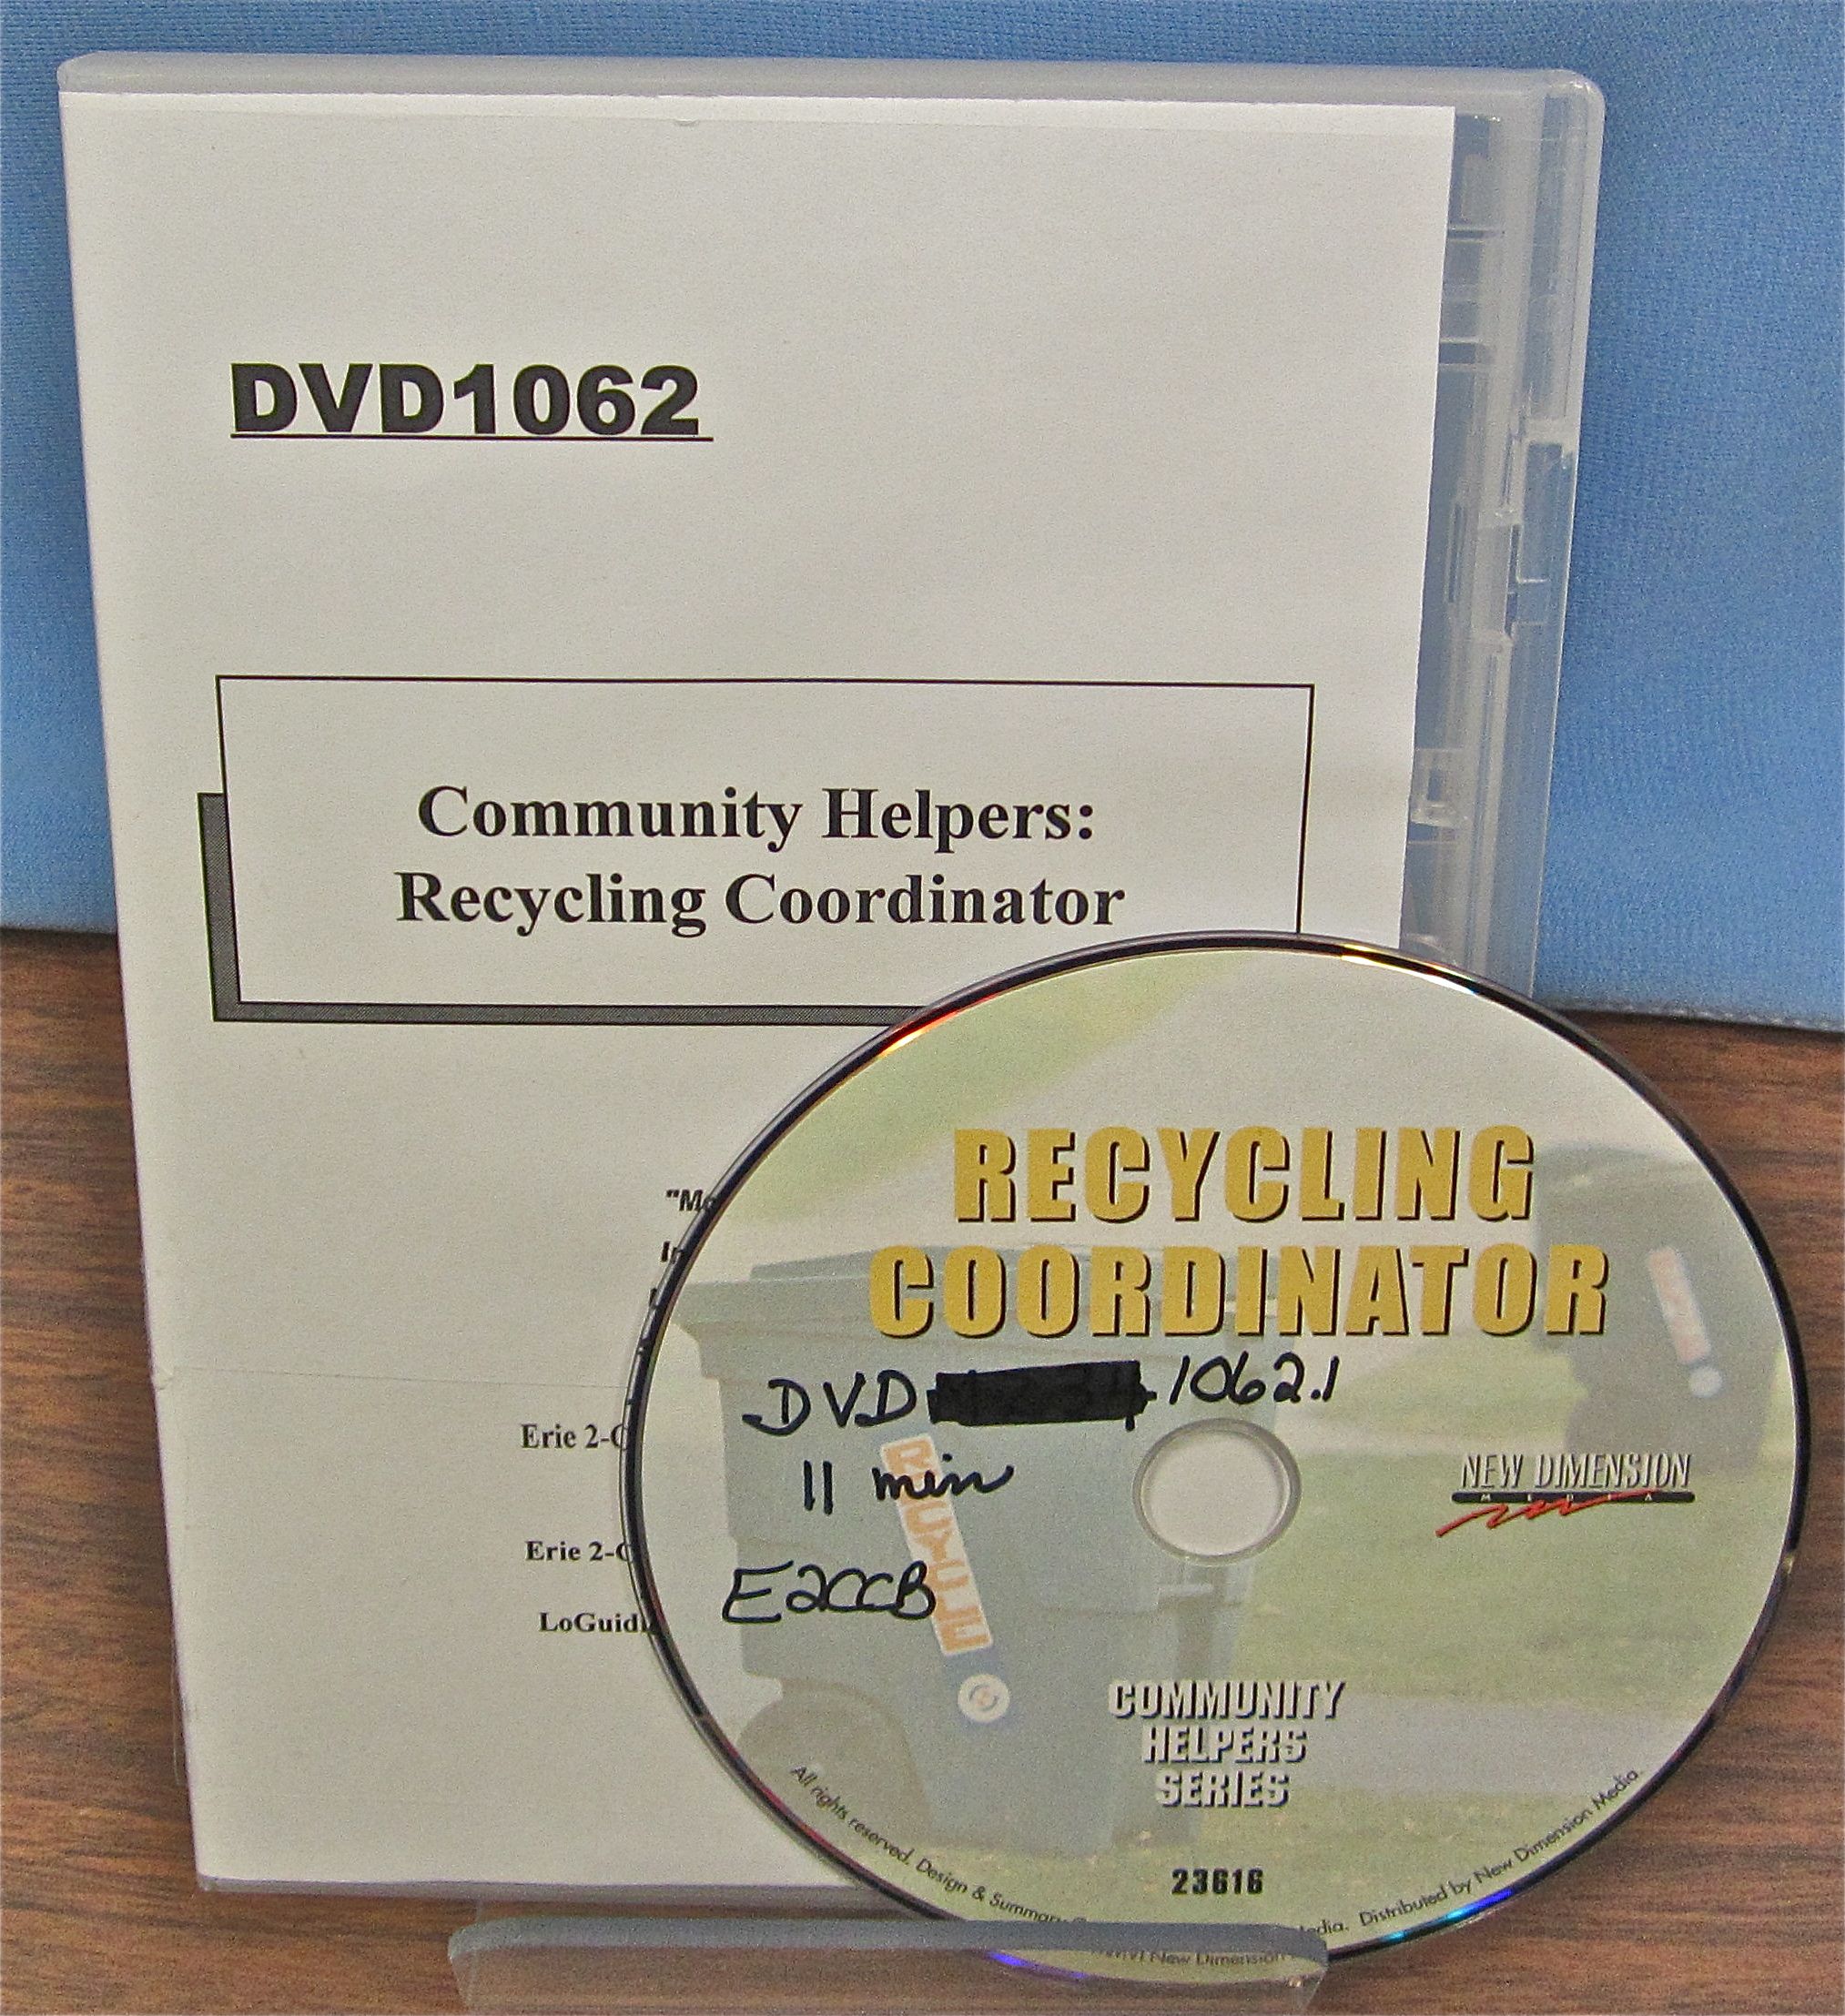 Community Helpers: Recycling Coordinator